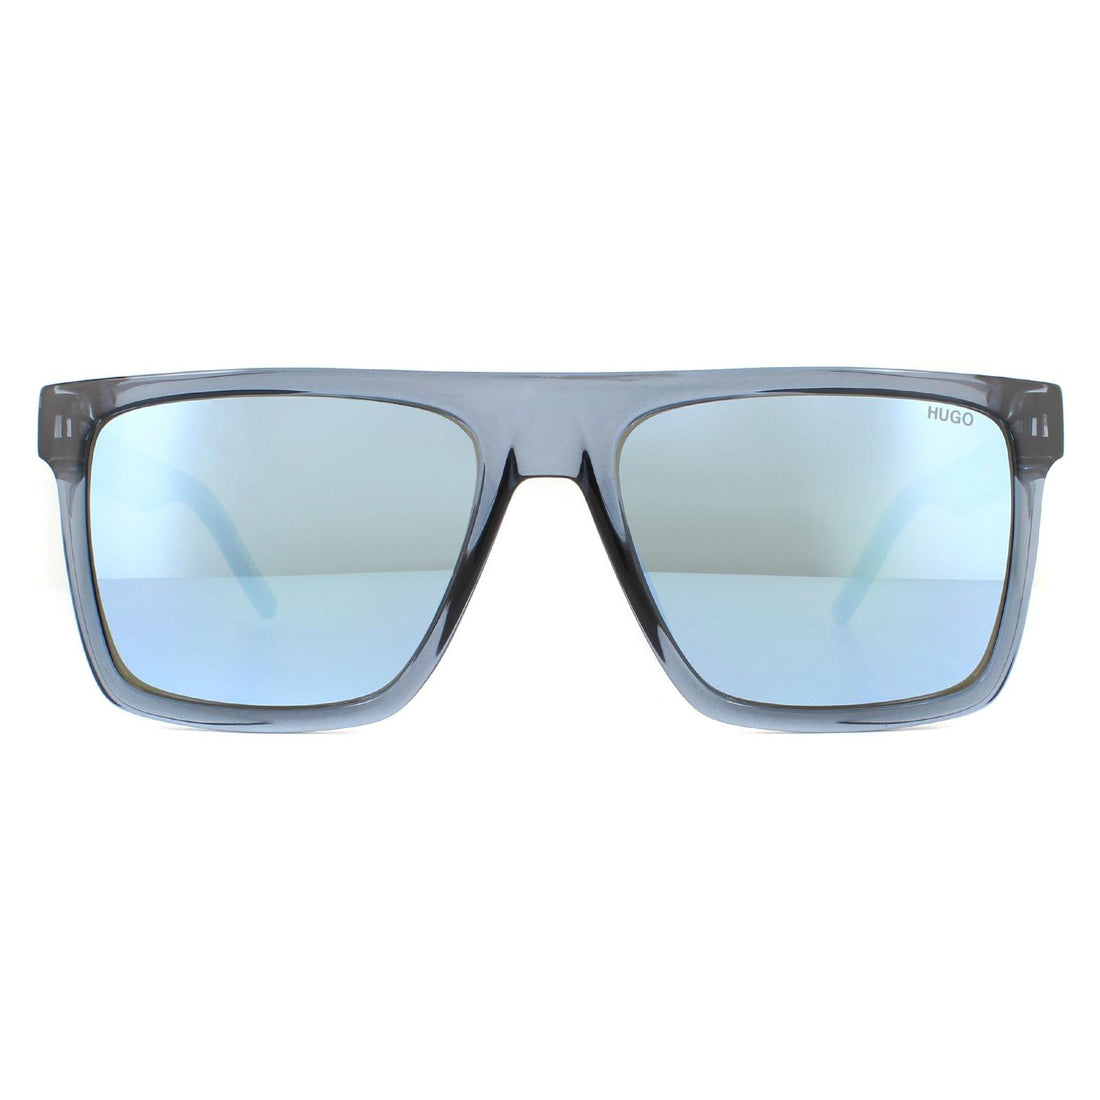 Hugo by Hugo Boss 1069/S Sunglasses Crystal Blue / Blue Mirror